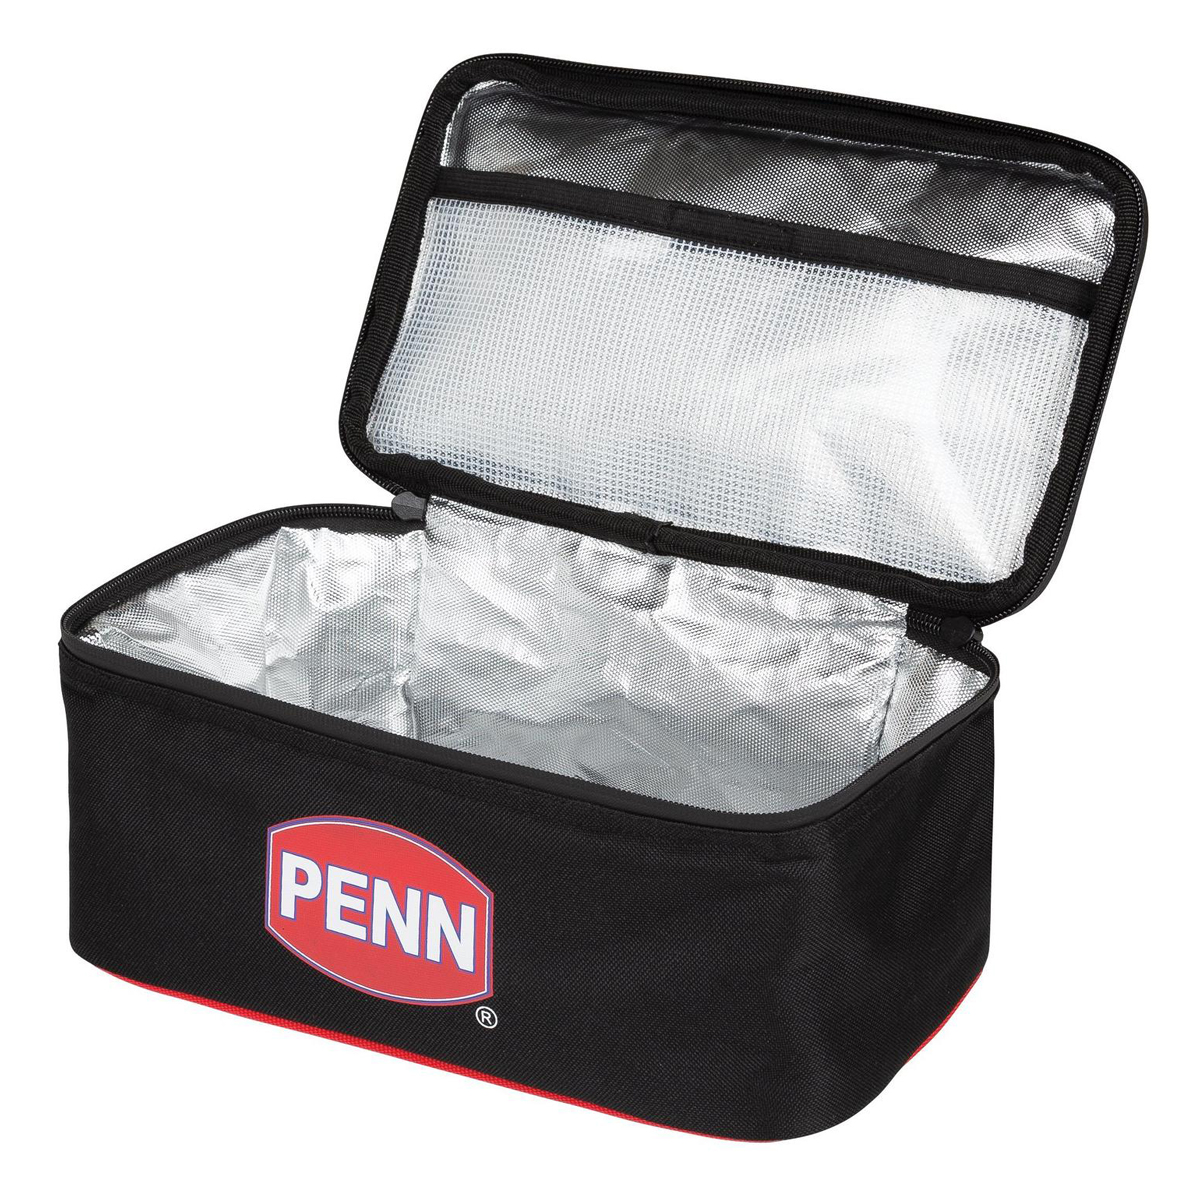 PENN Cool Bag Large